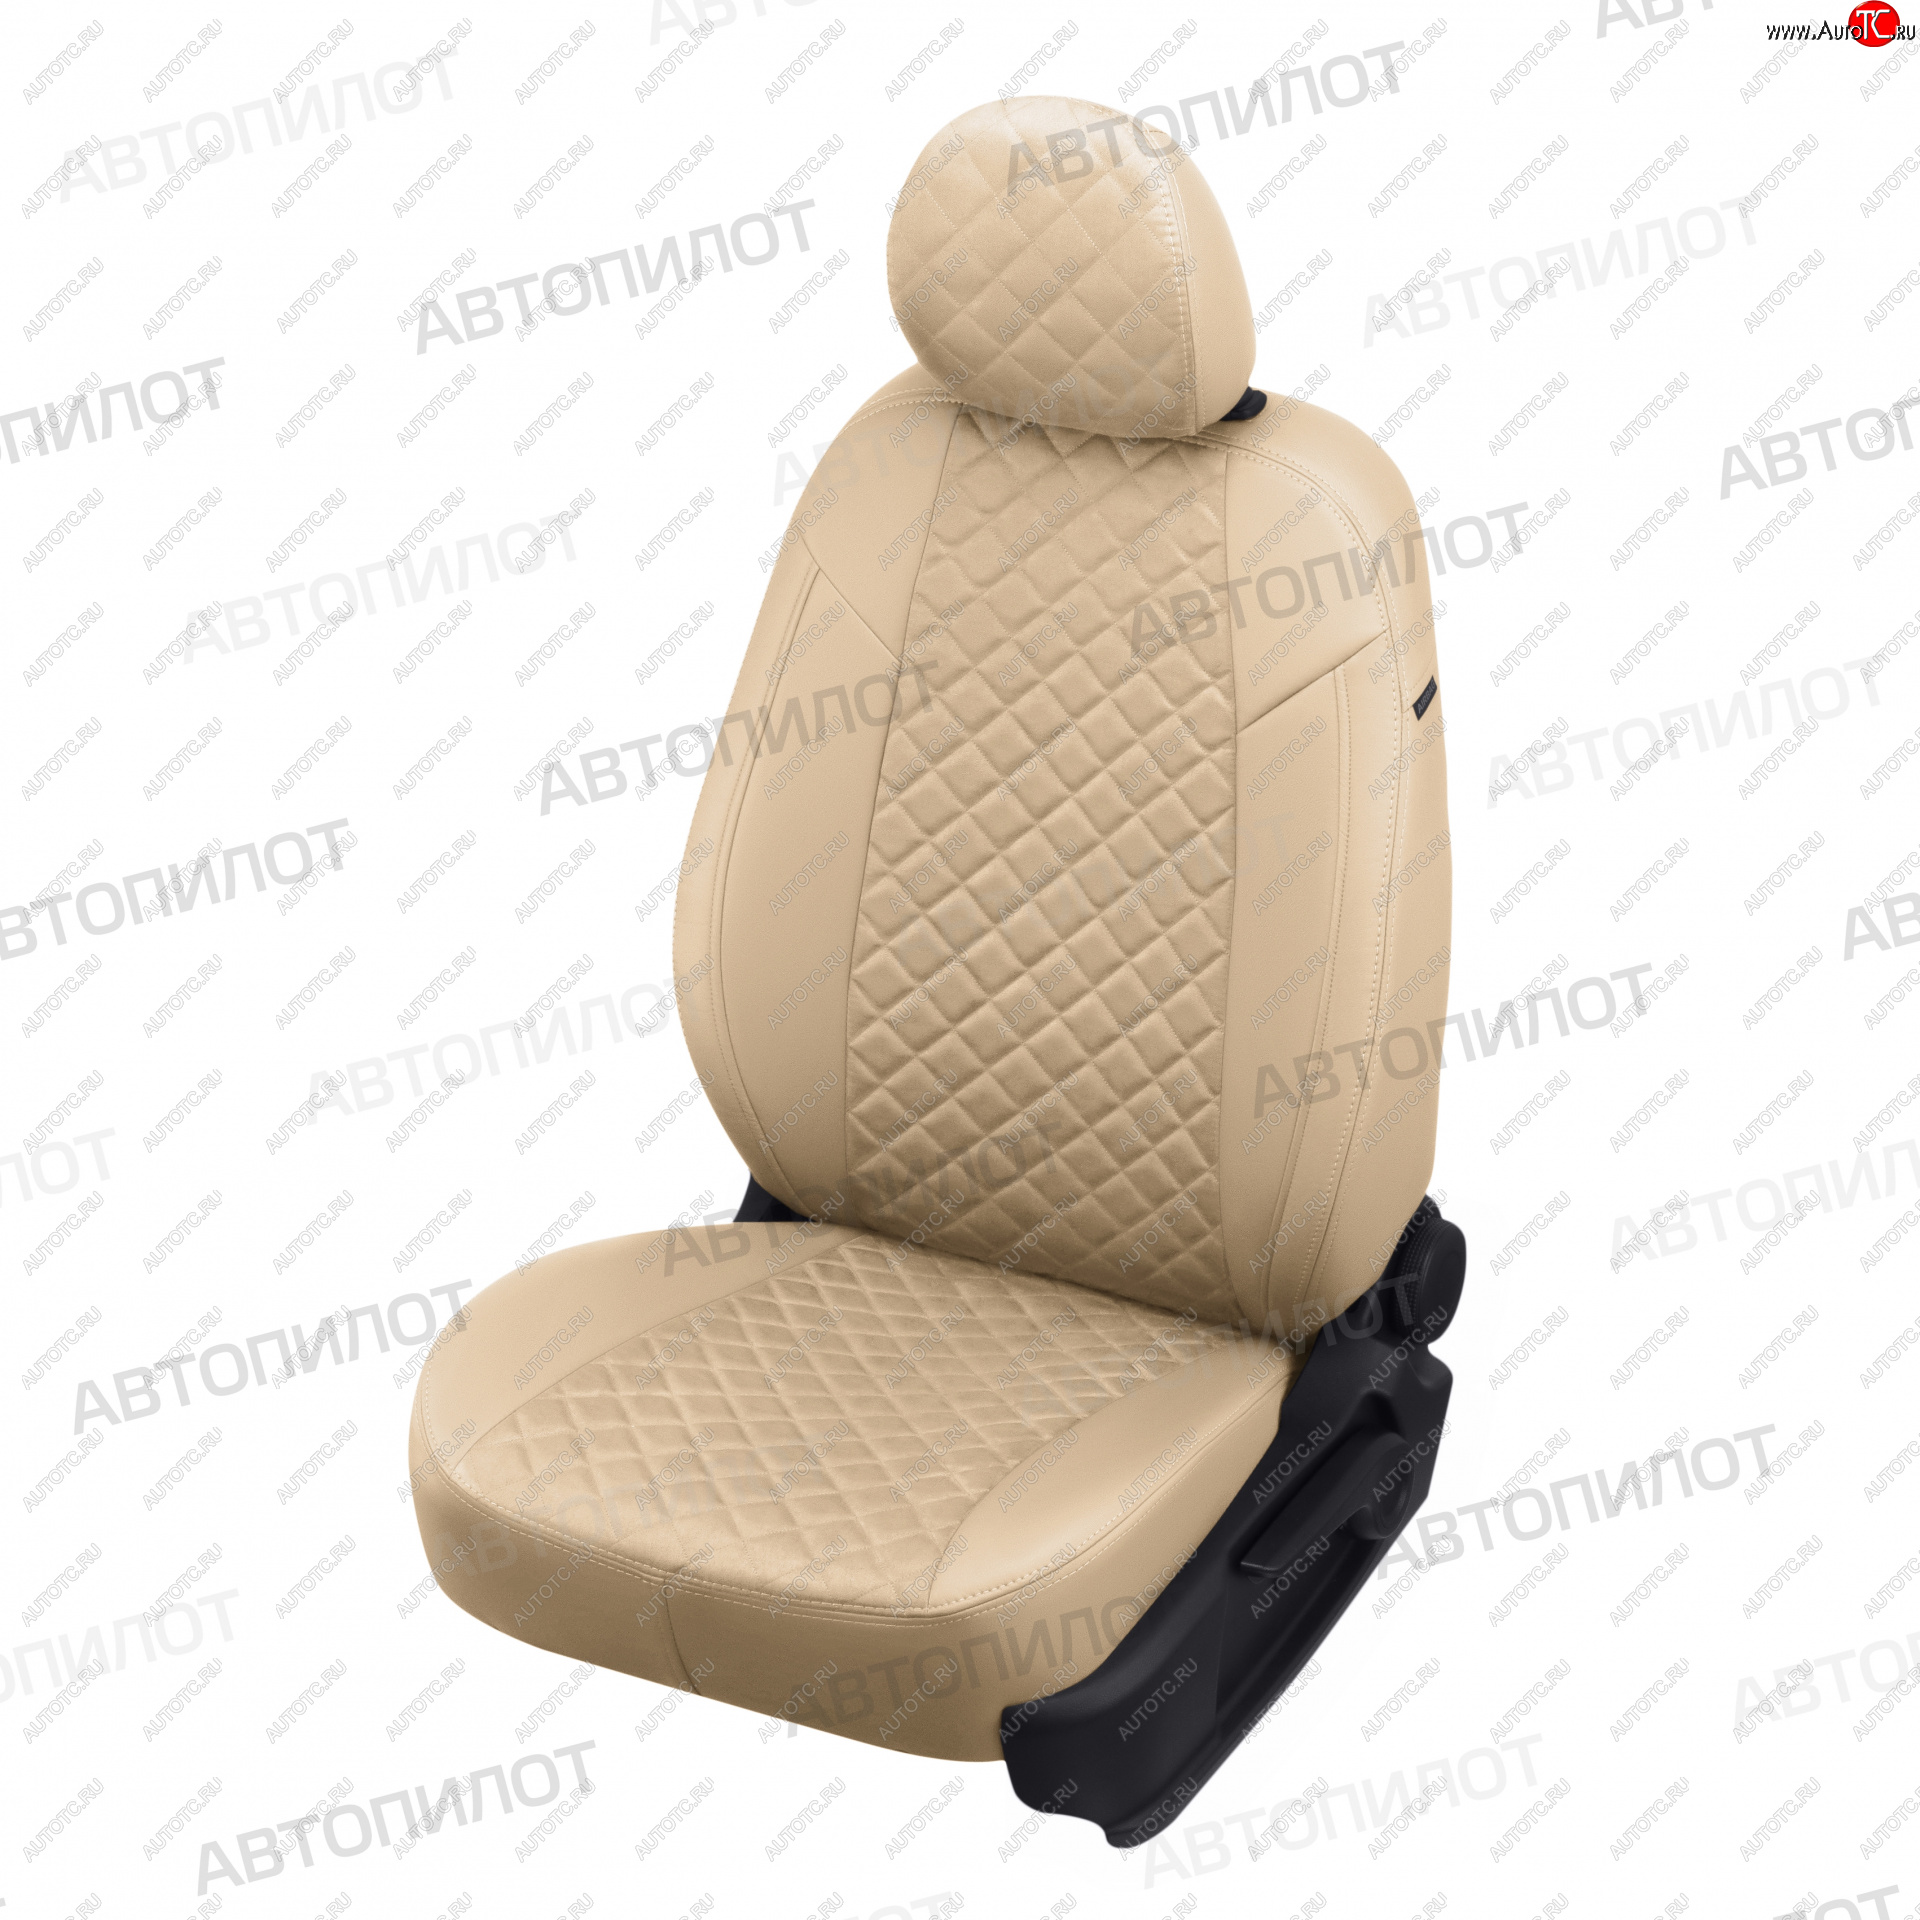 13 999 р. Чехлы сидений (экокожа/алькантара) Автопилот Ромб  Audi Q5  8R (2008-2017) (бежевый)